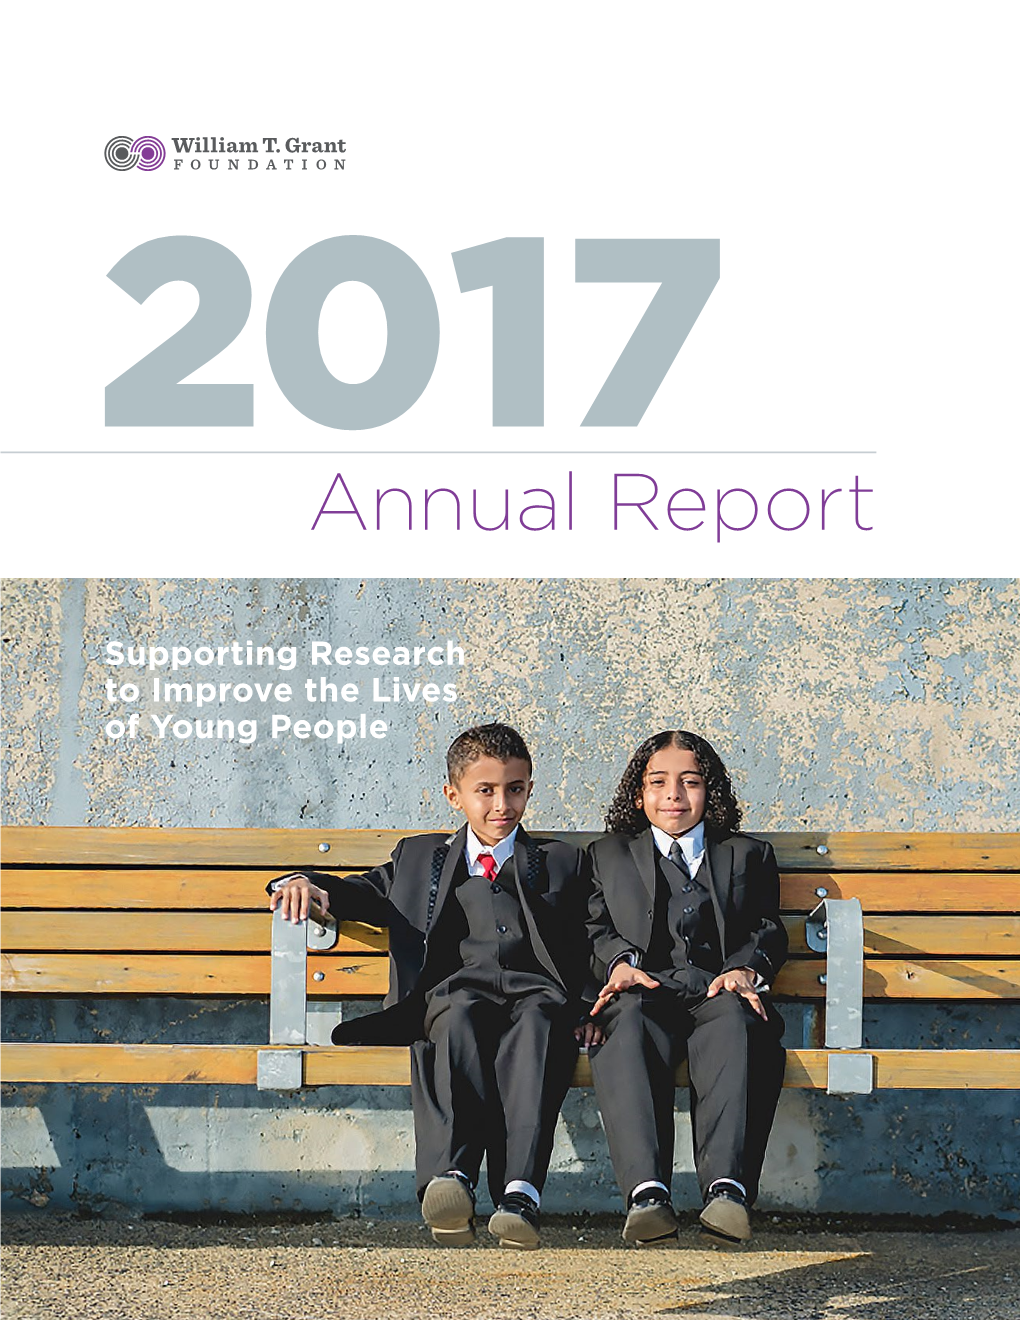 William T. Grant Foundation 2017 Annual Report